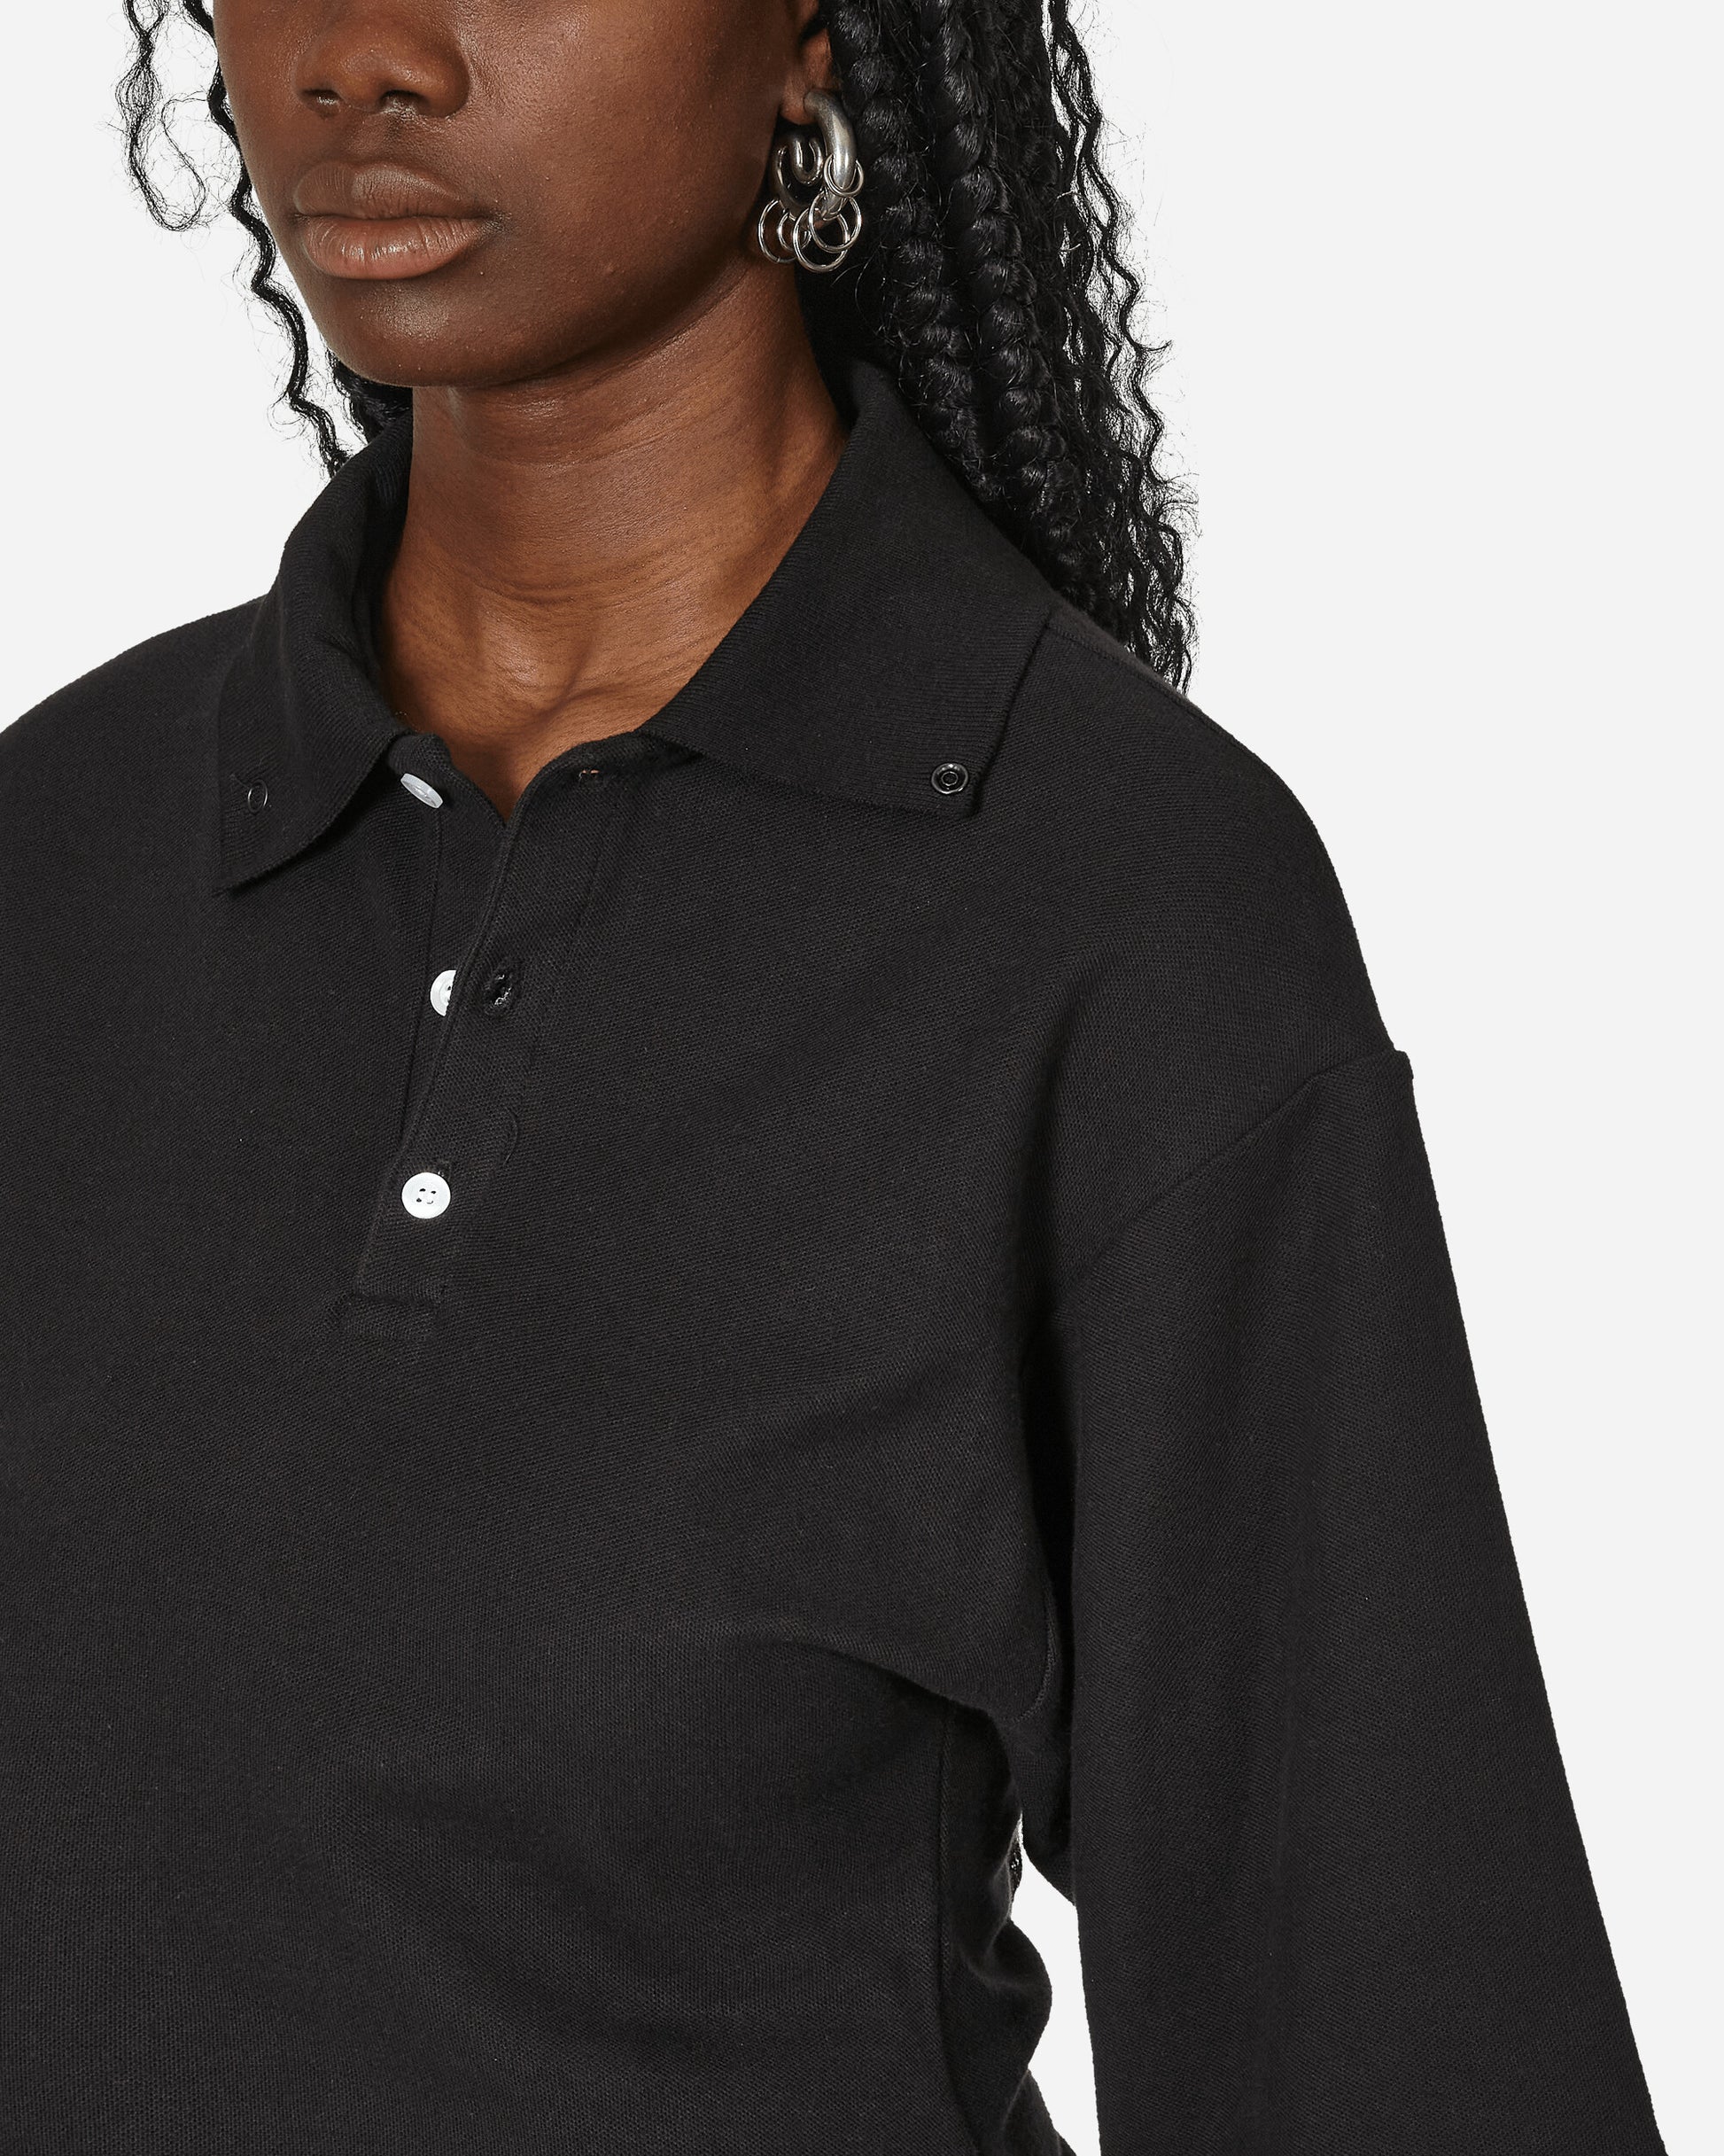 Prototypes Wmns Get Good Polo Shirt Black/Print T-Shirts Polo PT05TO22US BLACKPRINT